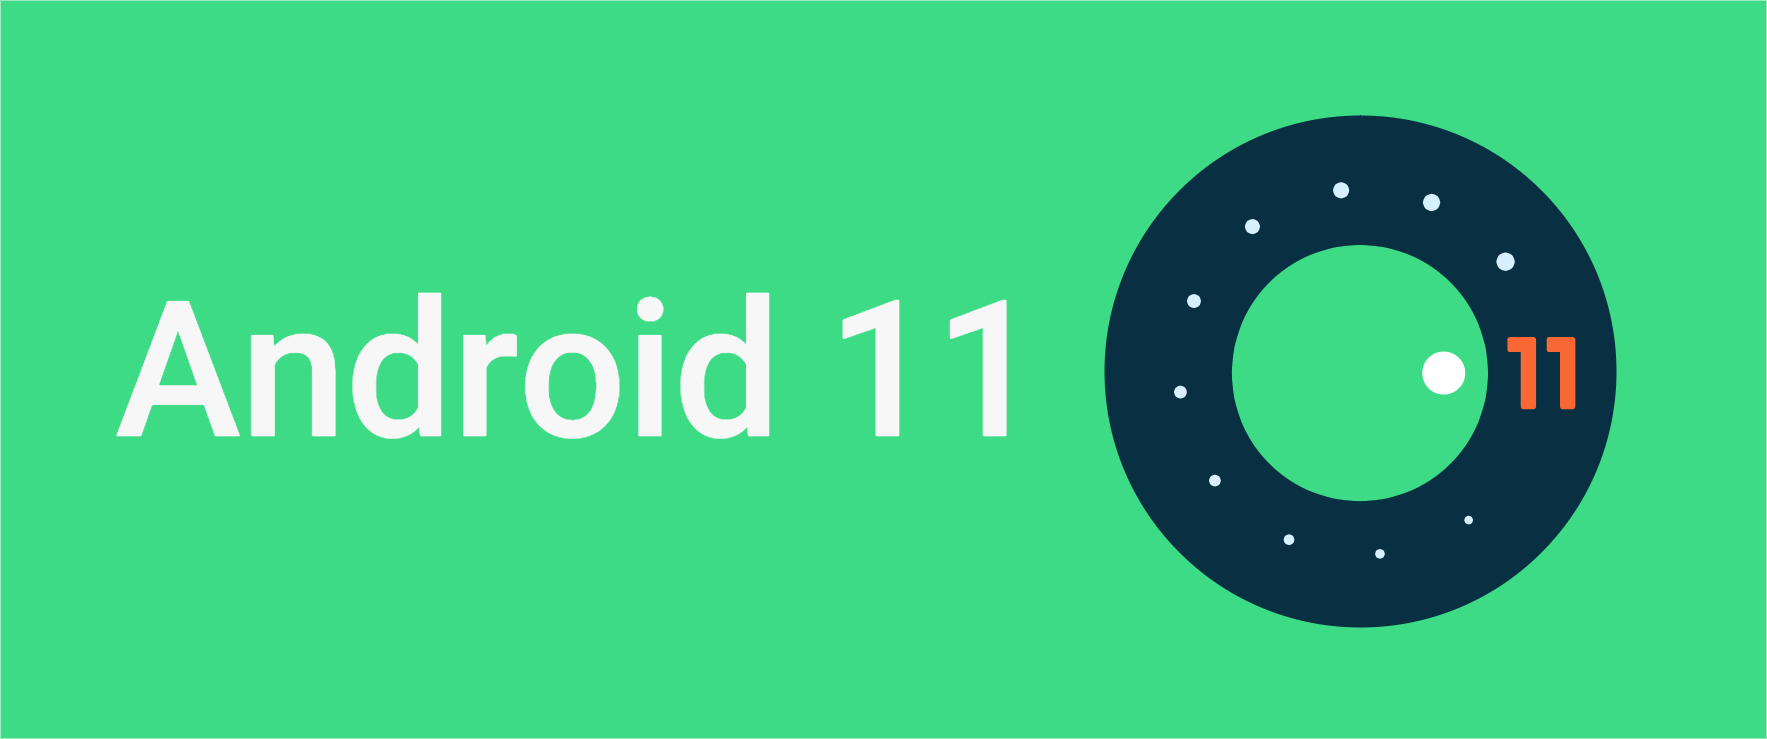 android-11-development